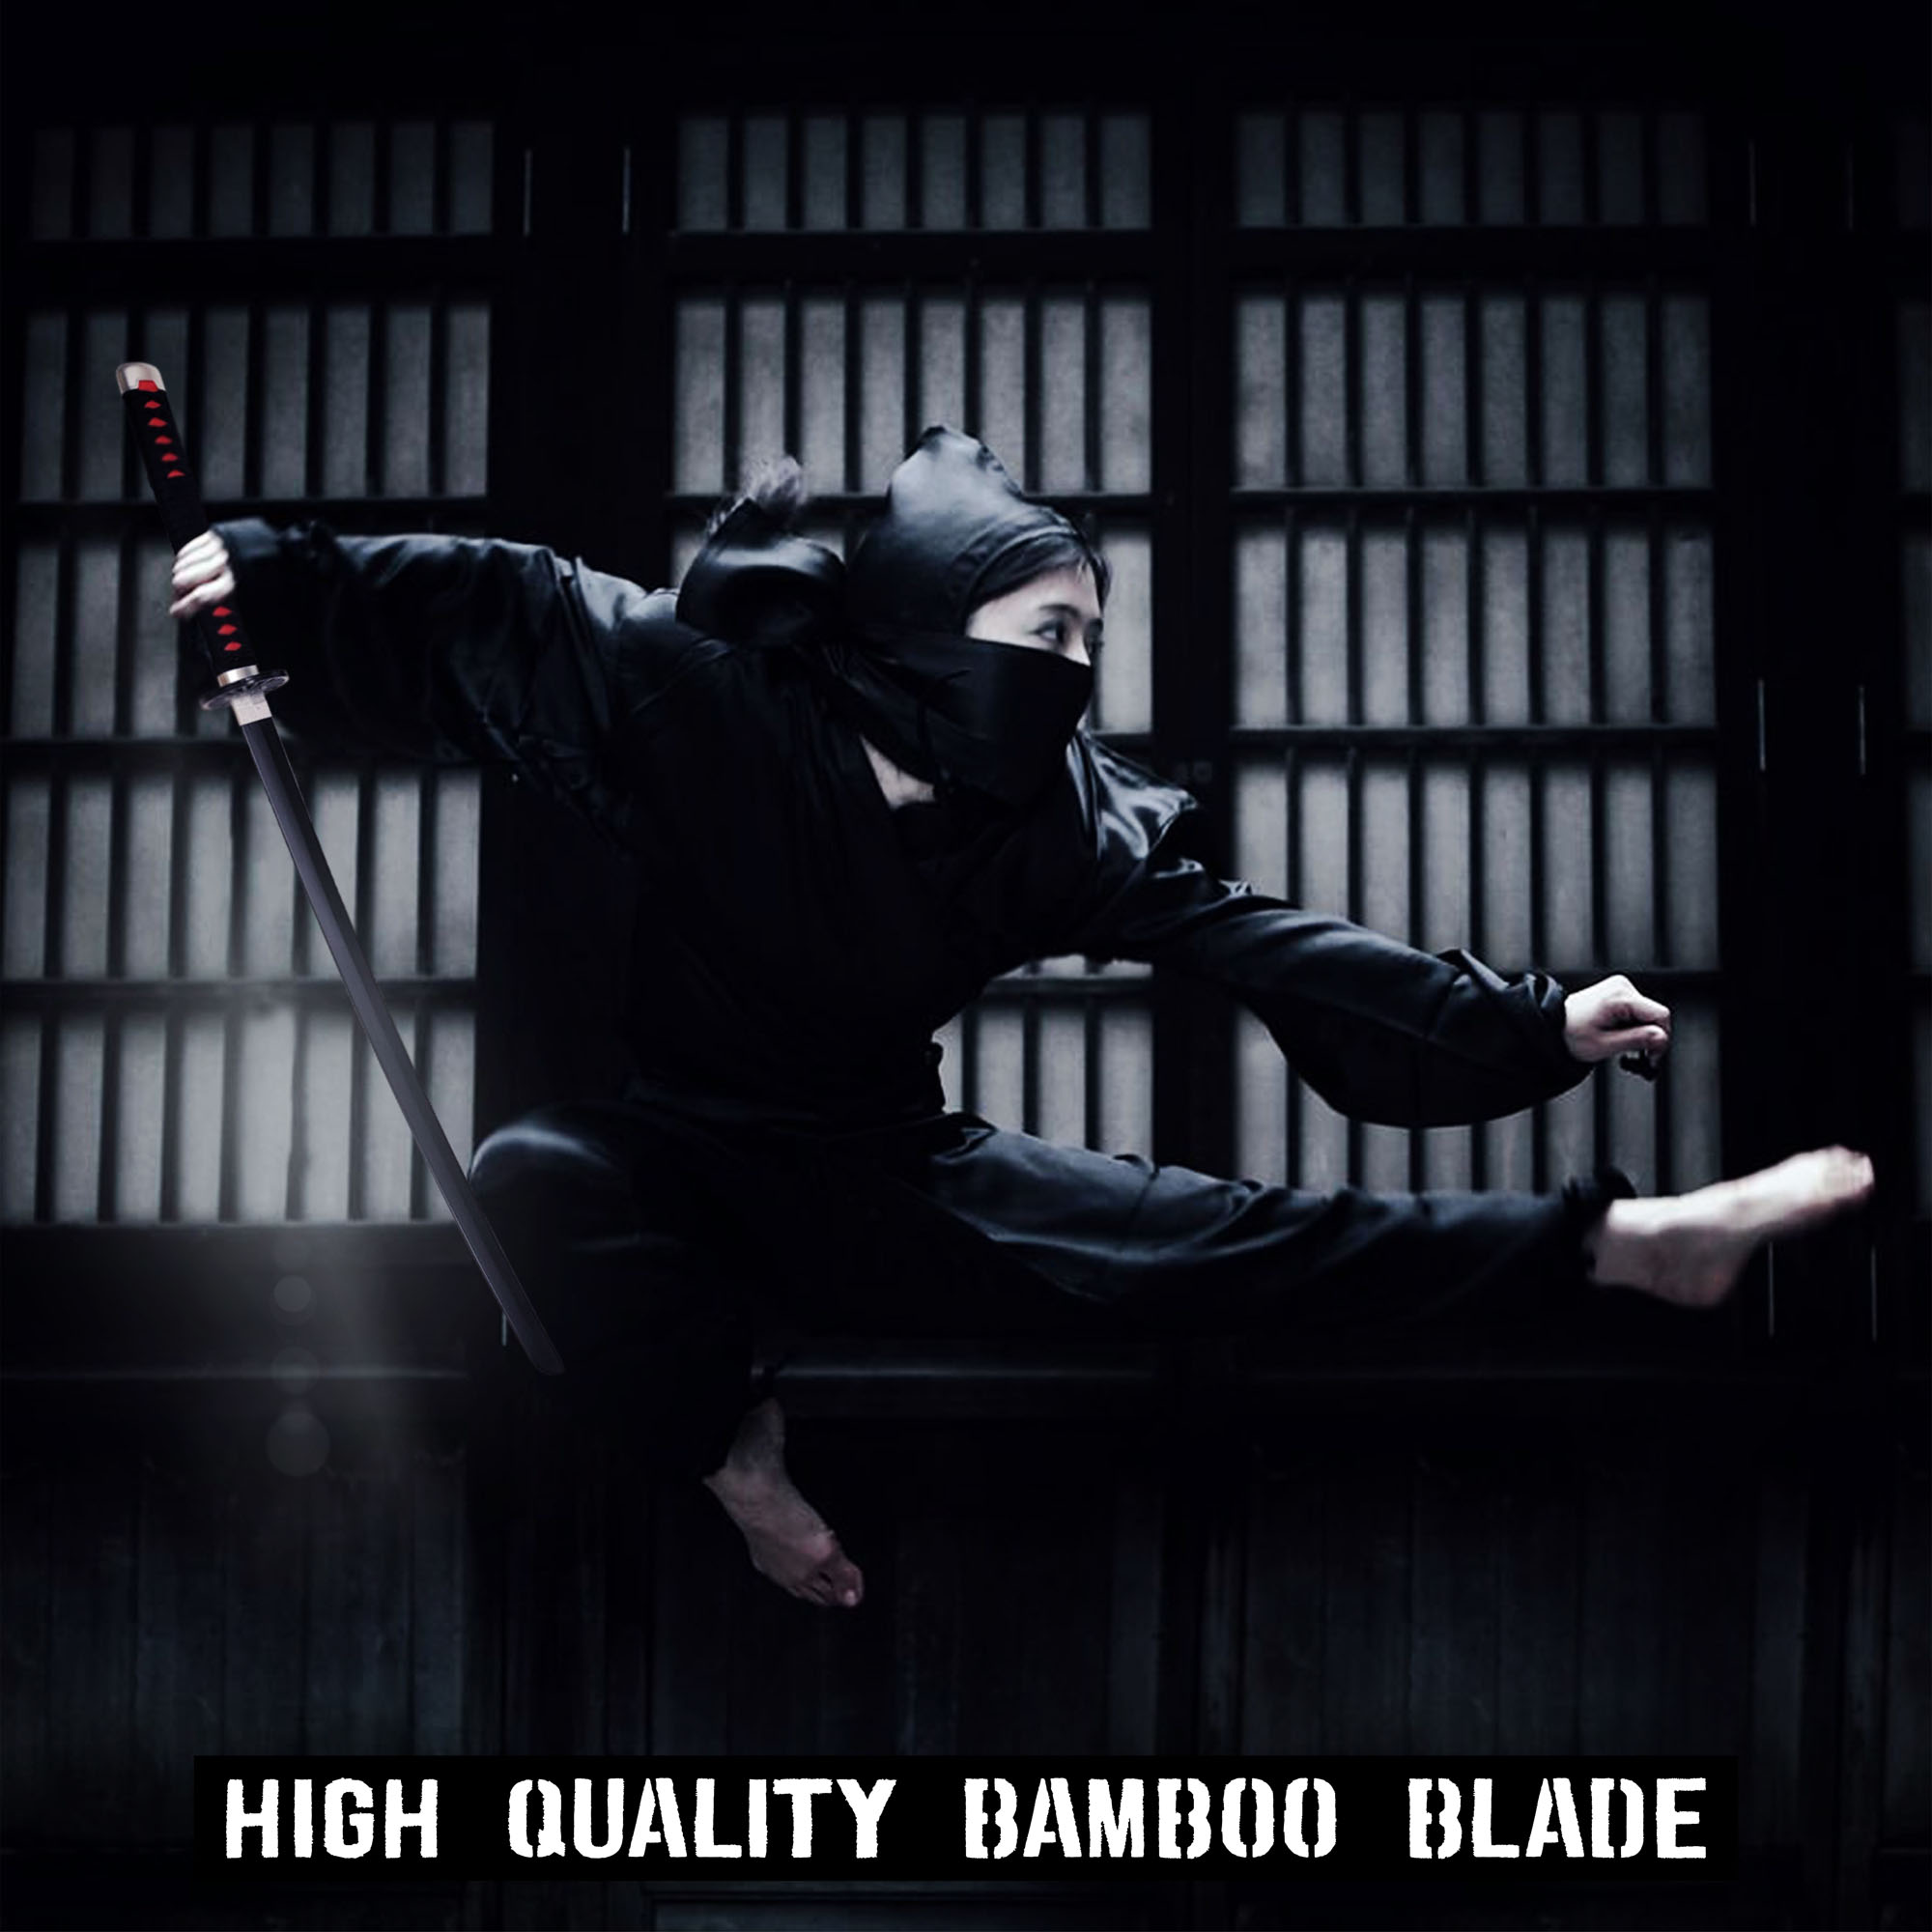 Demon Slayer - Kamado Tanjiro Wooden Sword with Scabbard